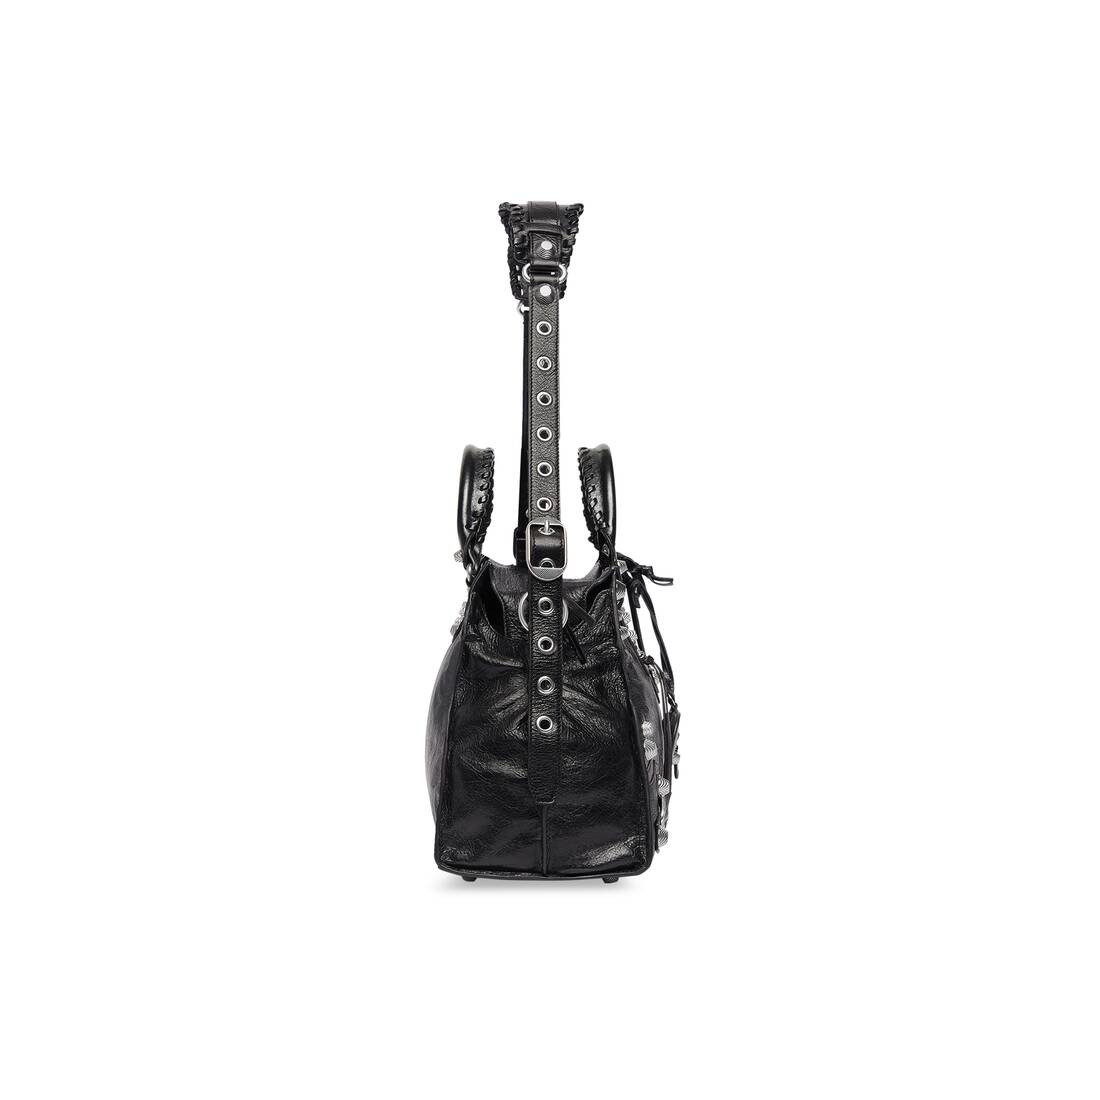 Balenciaga Black Leather And Lambskin Leather RH Classic City Bag